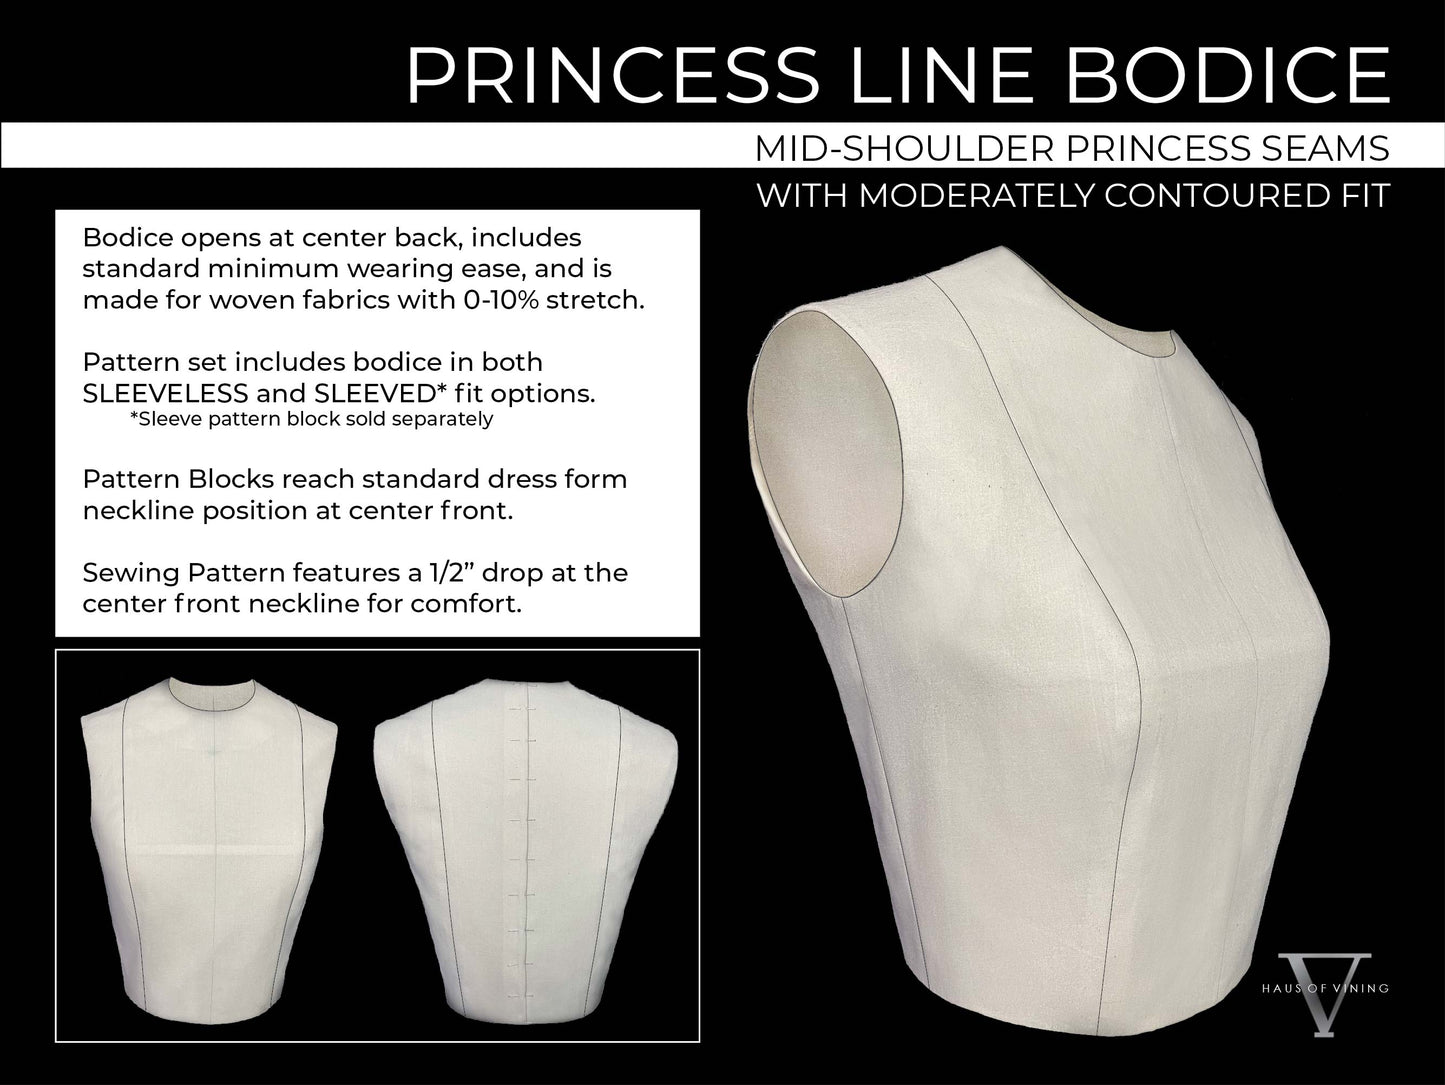 Wolf Form (Sizes 4-18) Princess Line Bodice Sewing Pattern and Pattern Block Set (PDF DOWNLOAD)